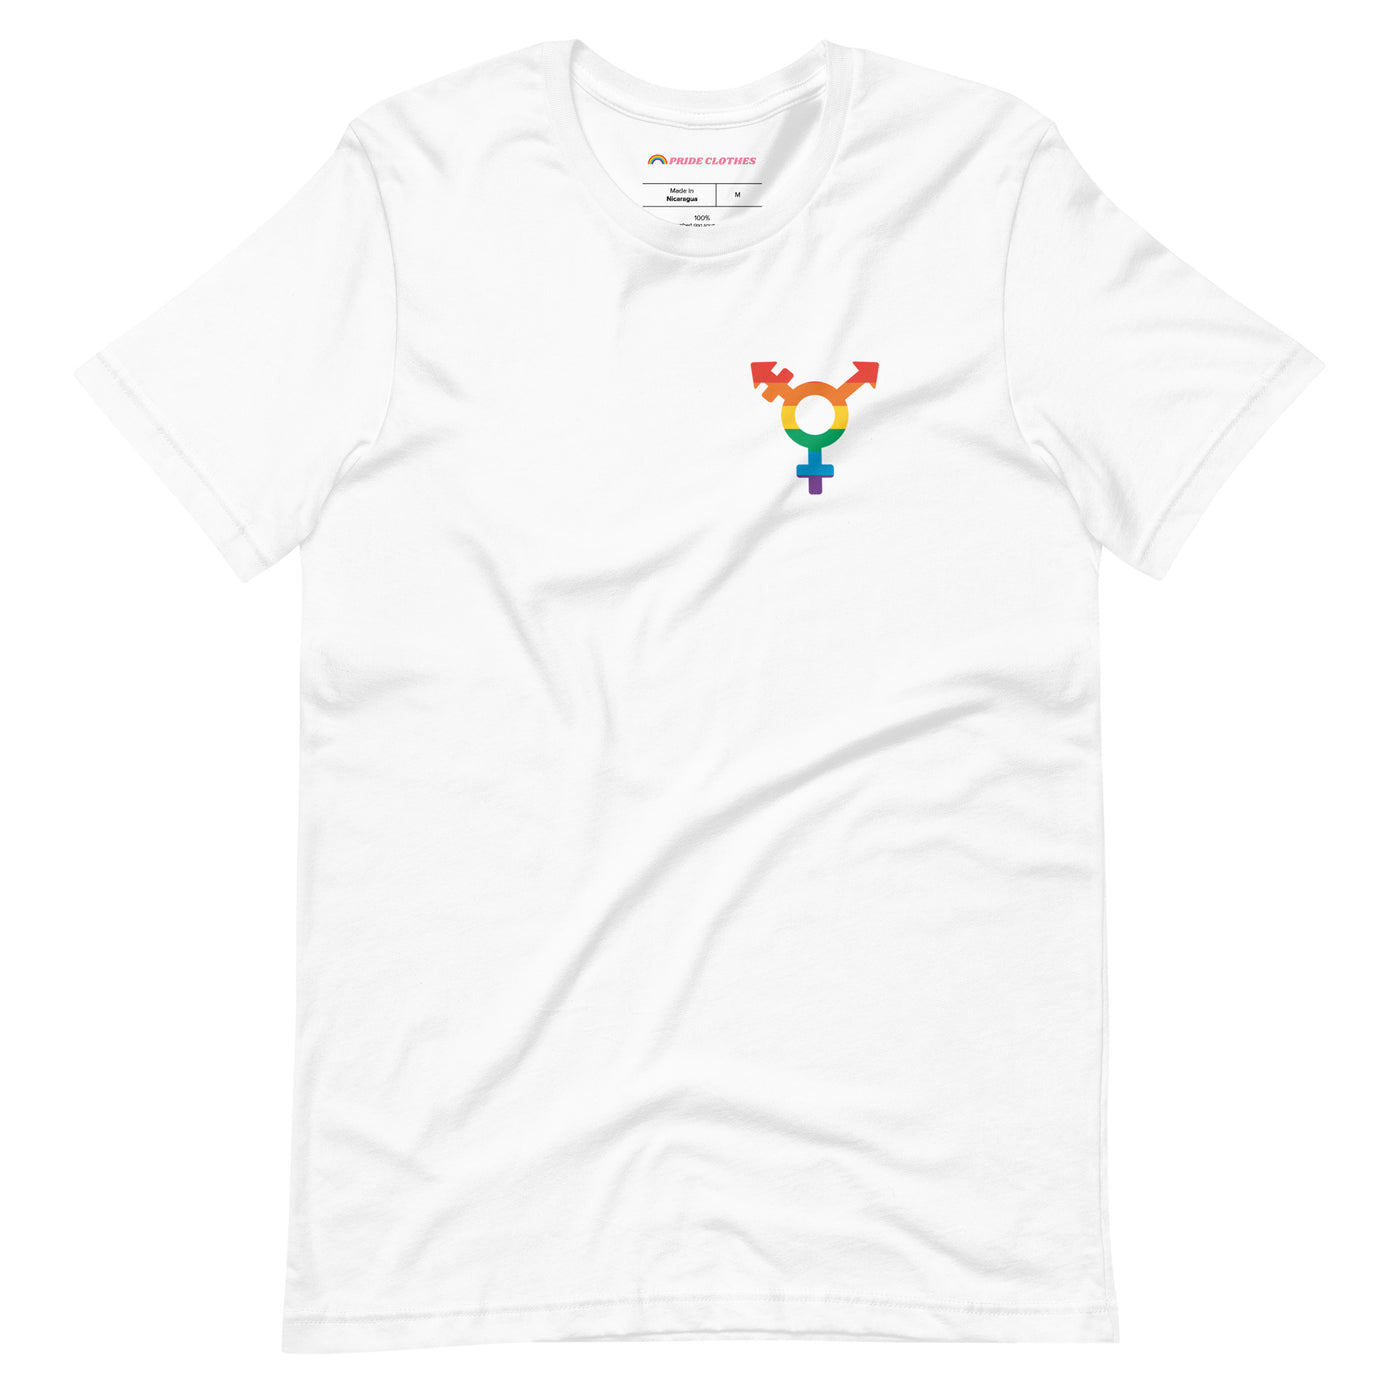 PrideClothes - Trans Pride Colors Symbol Shirt - White